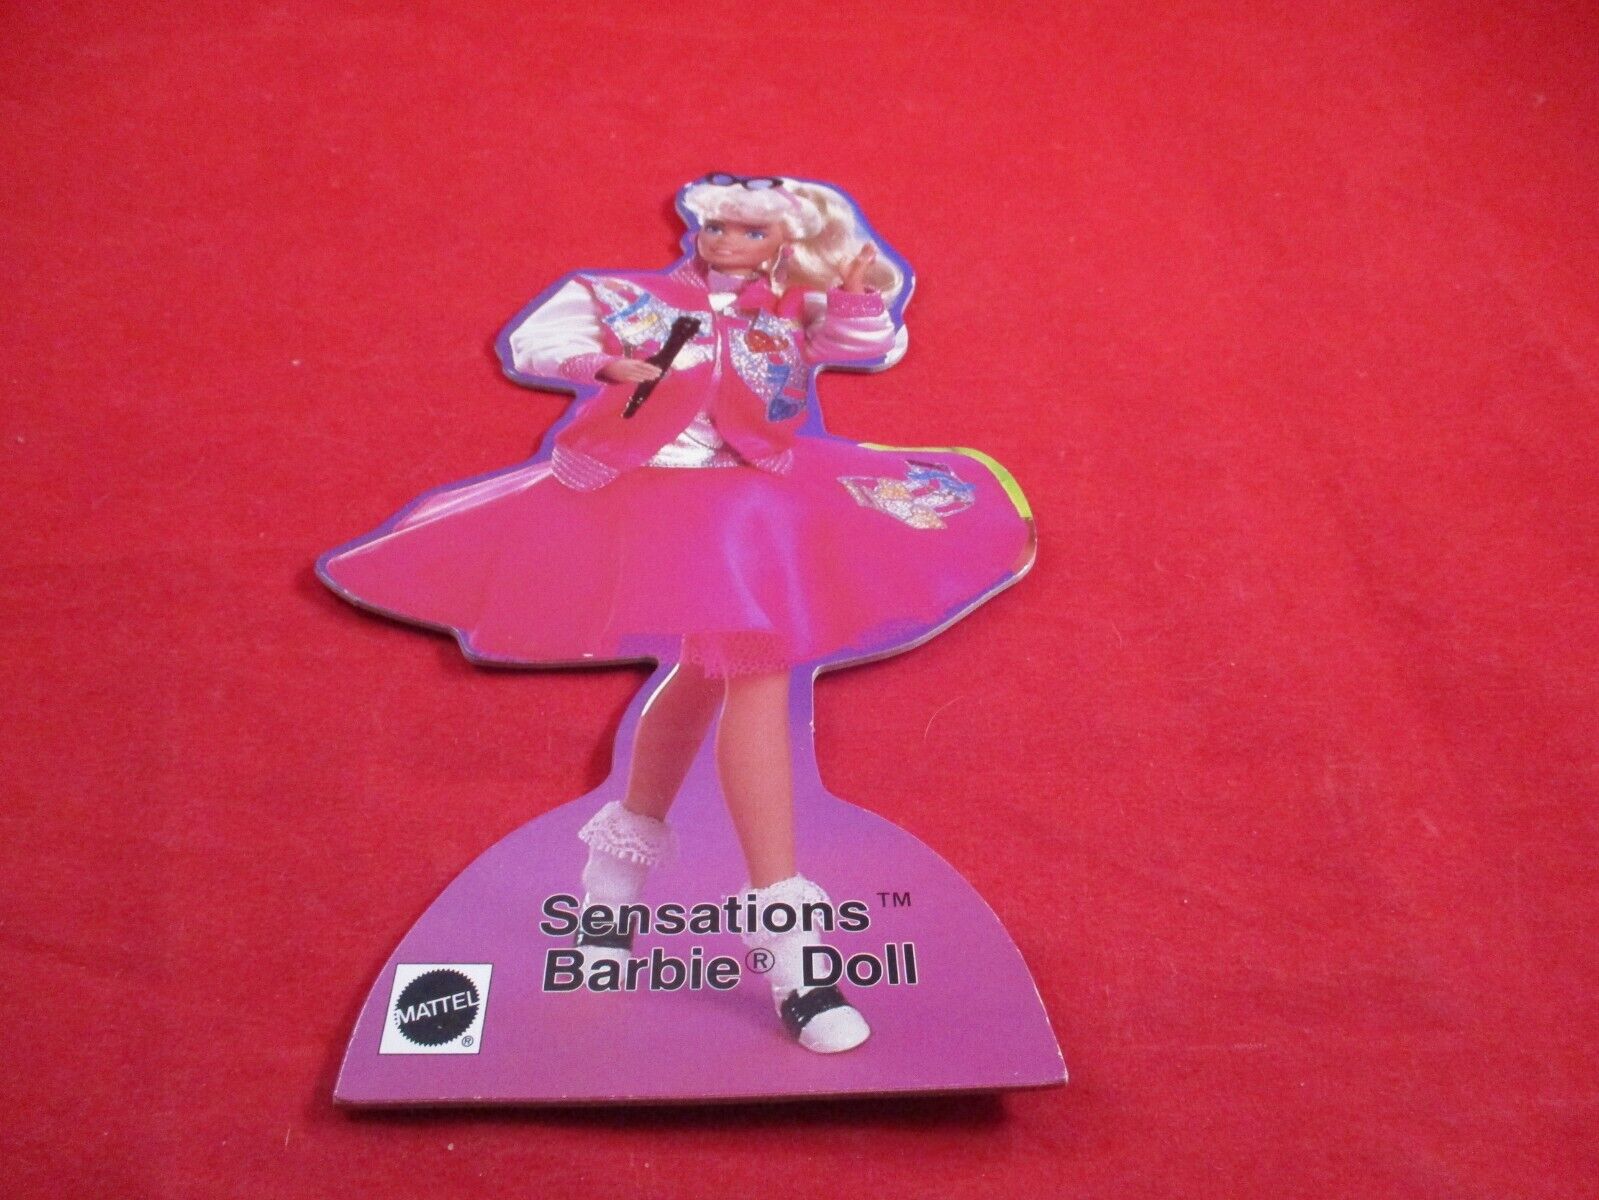 Sensations Barbie Doll Promotional Original Mattel Store Display